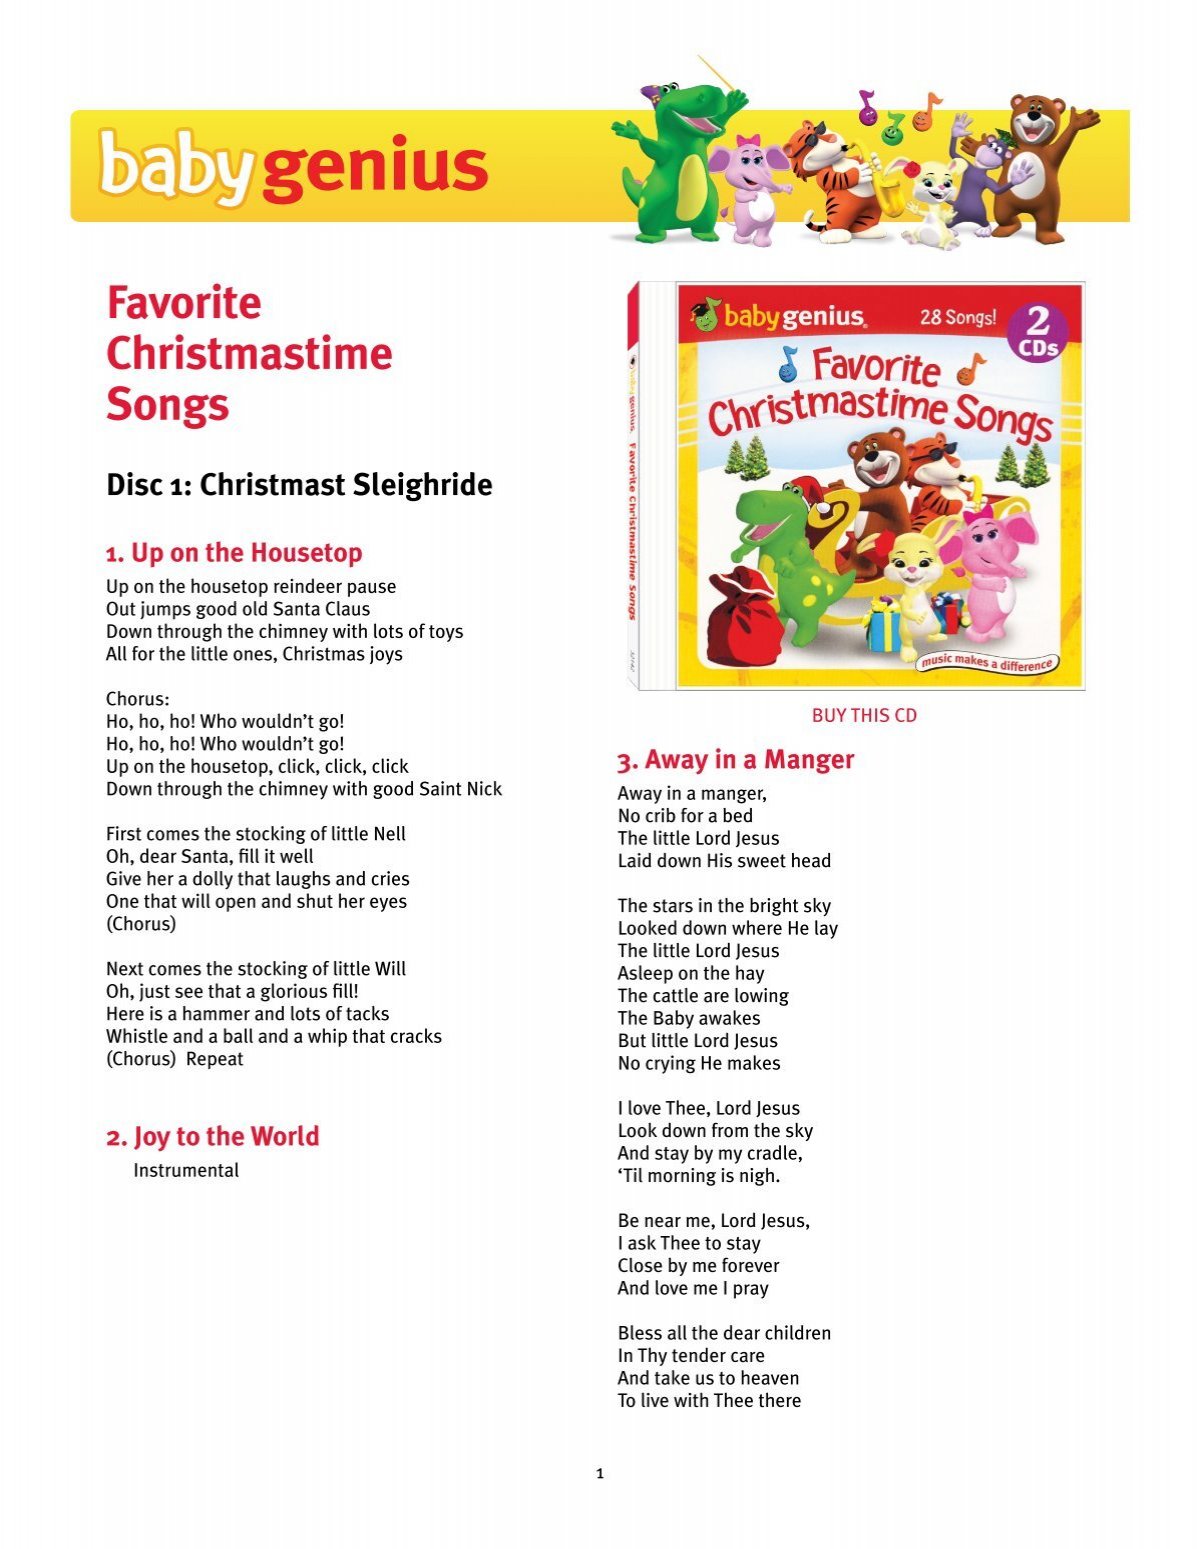 Download Favorite Christmastime Songs Lyrics Pdf Baby Genius